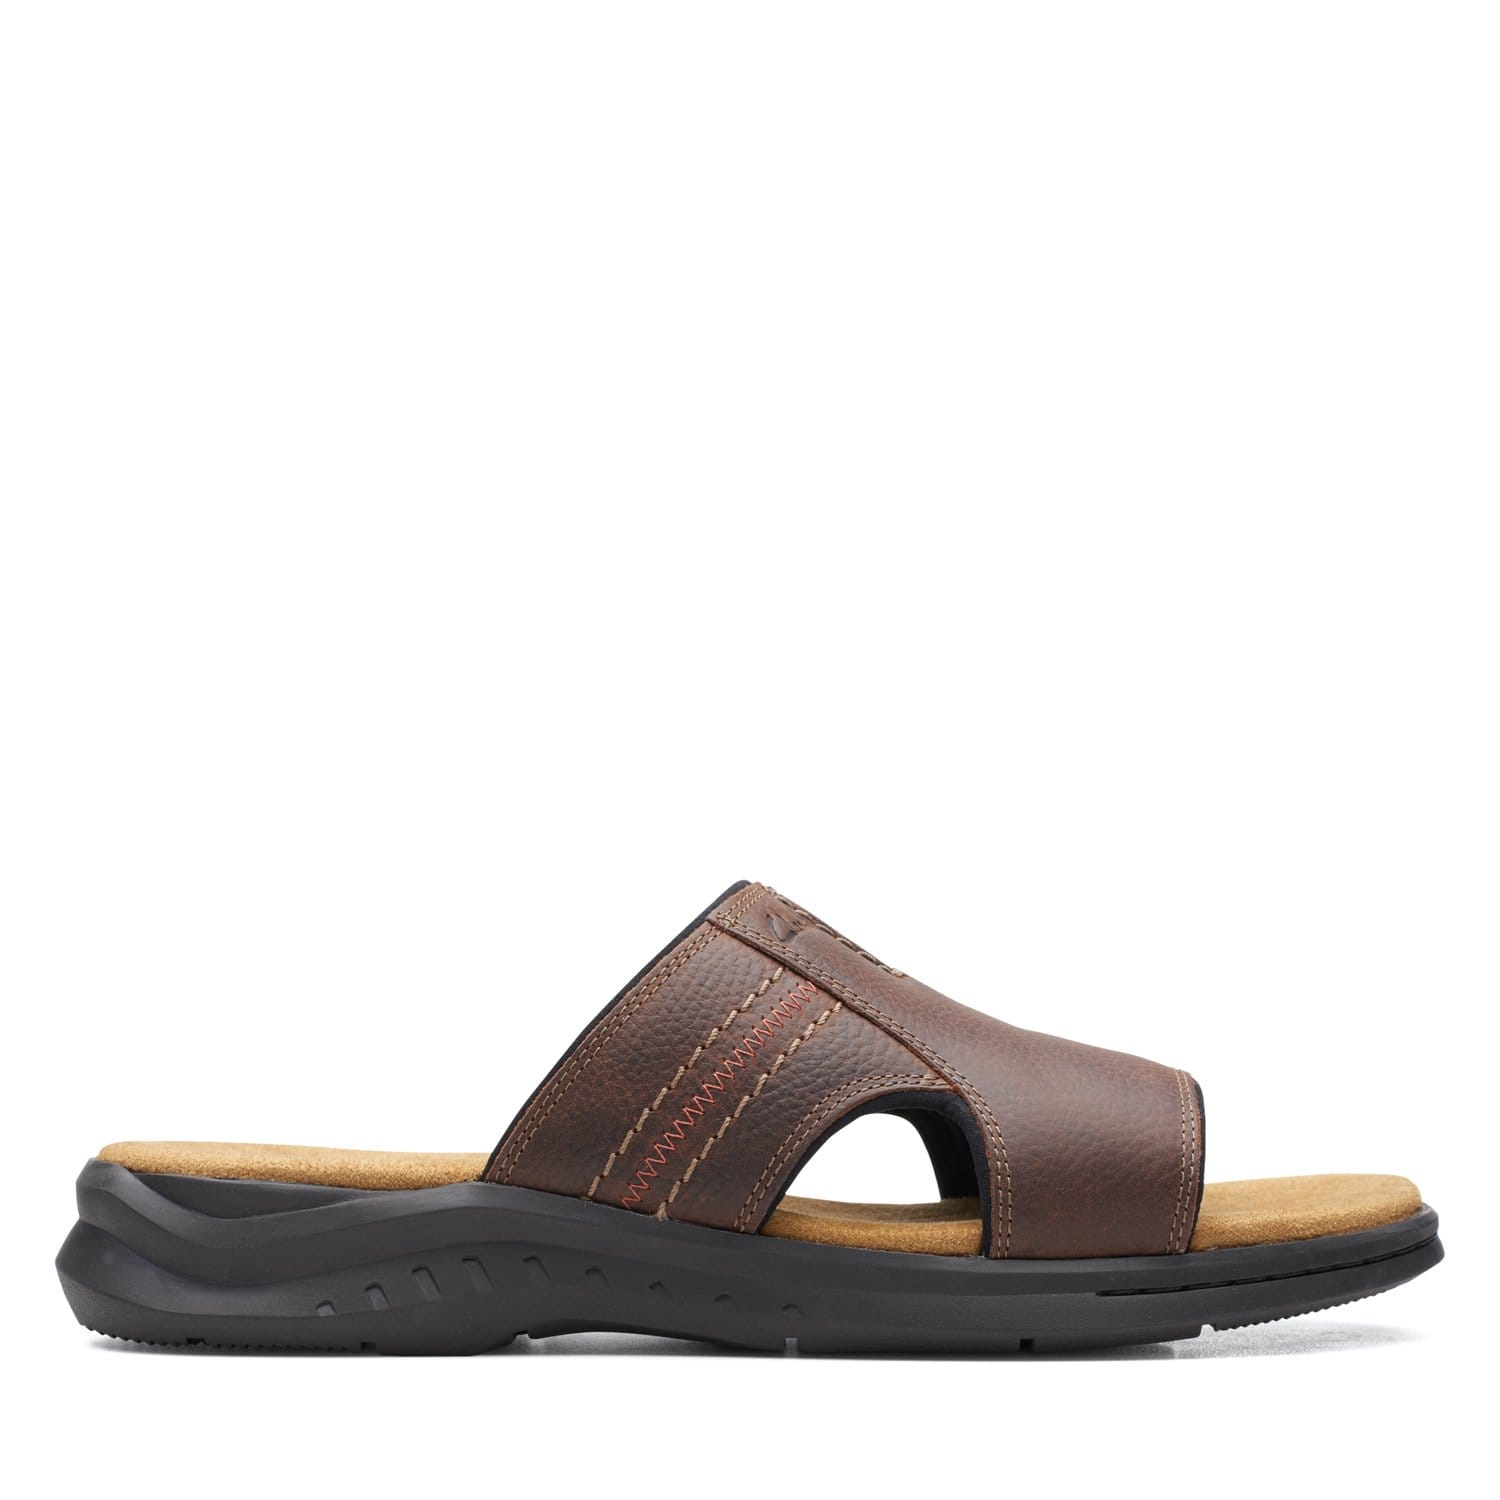 Clarks Hapsford Slide Sandals - Brown Tumbled - 26158086 - G Width (Standard Fit)